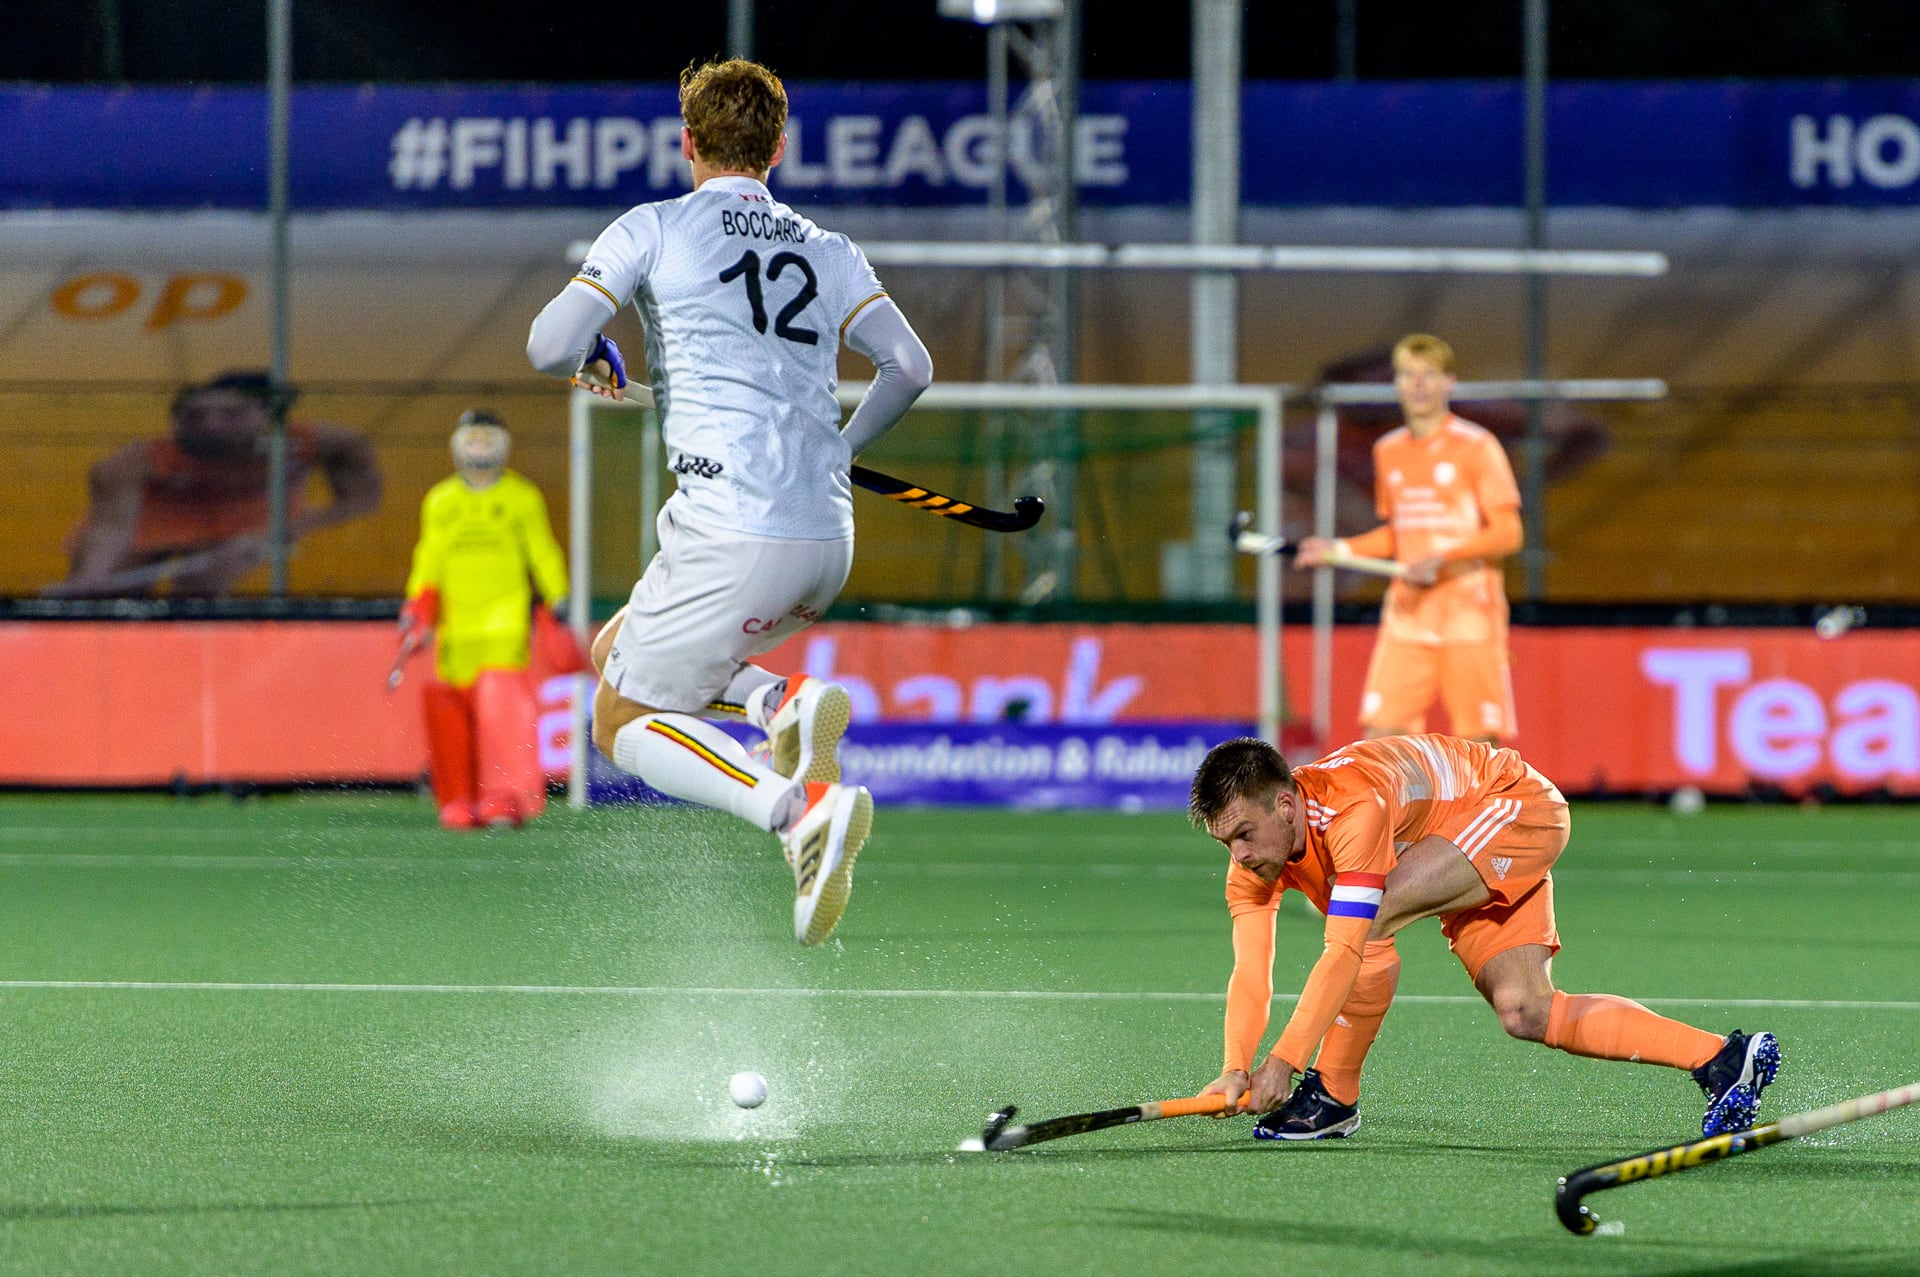 FIH Pro League match between the Netherlands and Belgium